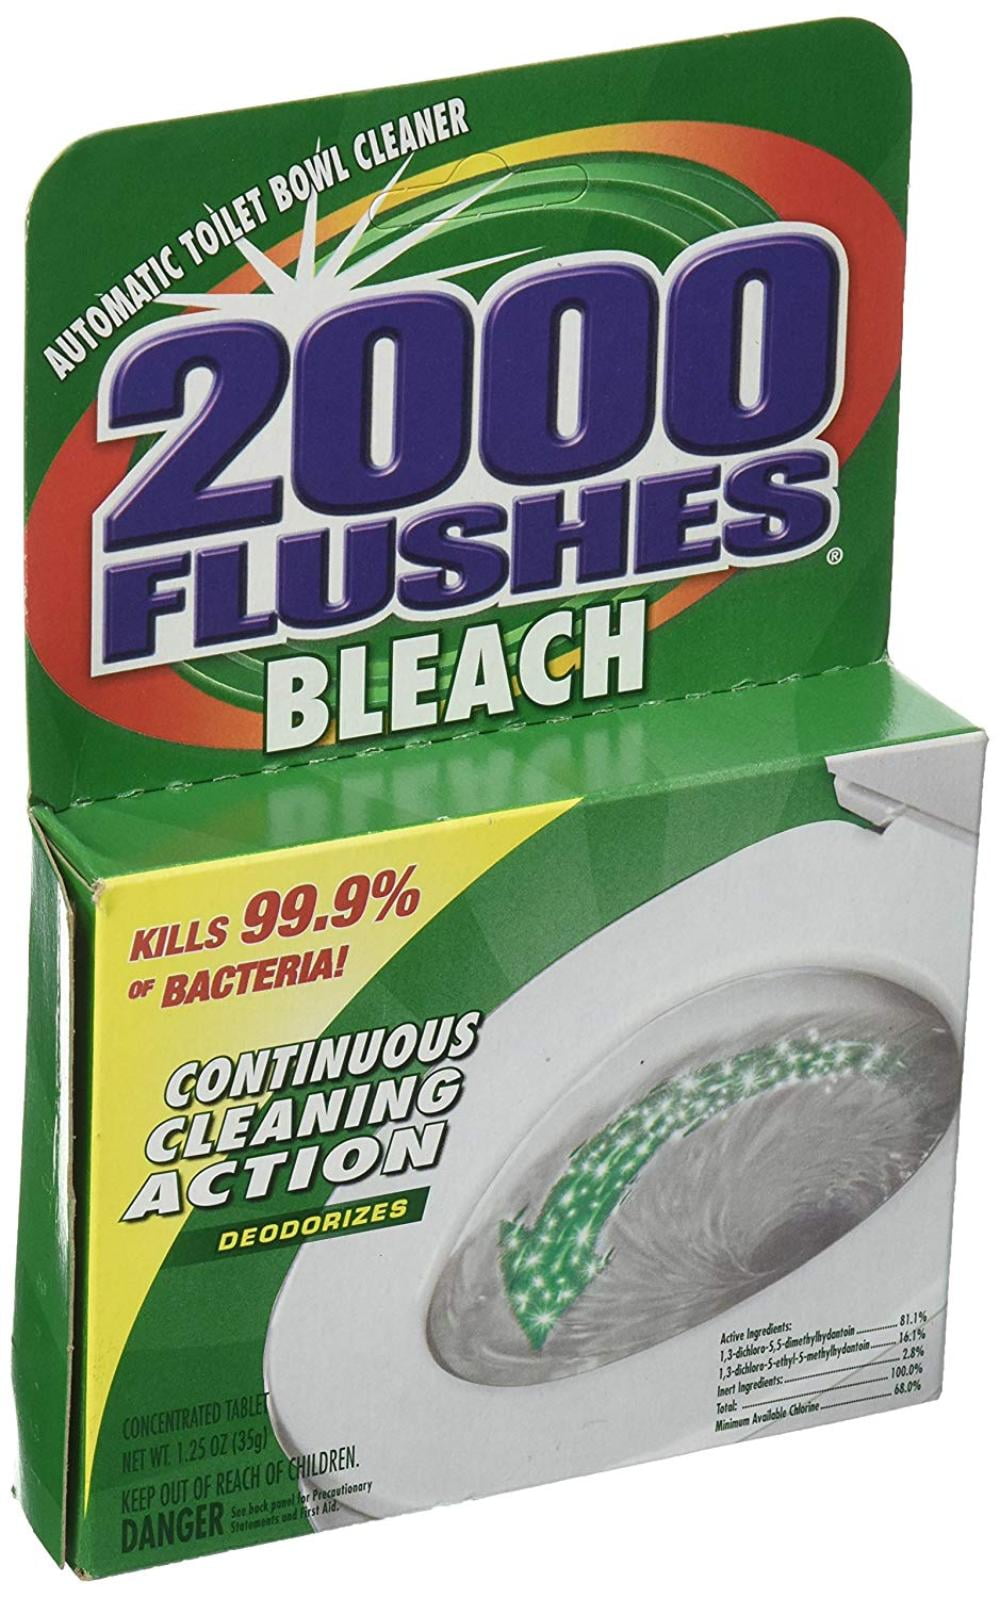 Bleach Automatic Toilet Bowl Cleaner, 1.25 OZ, Maintains